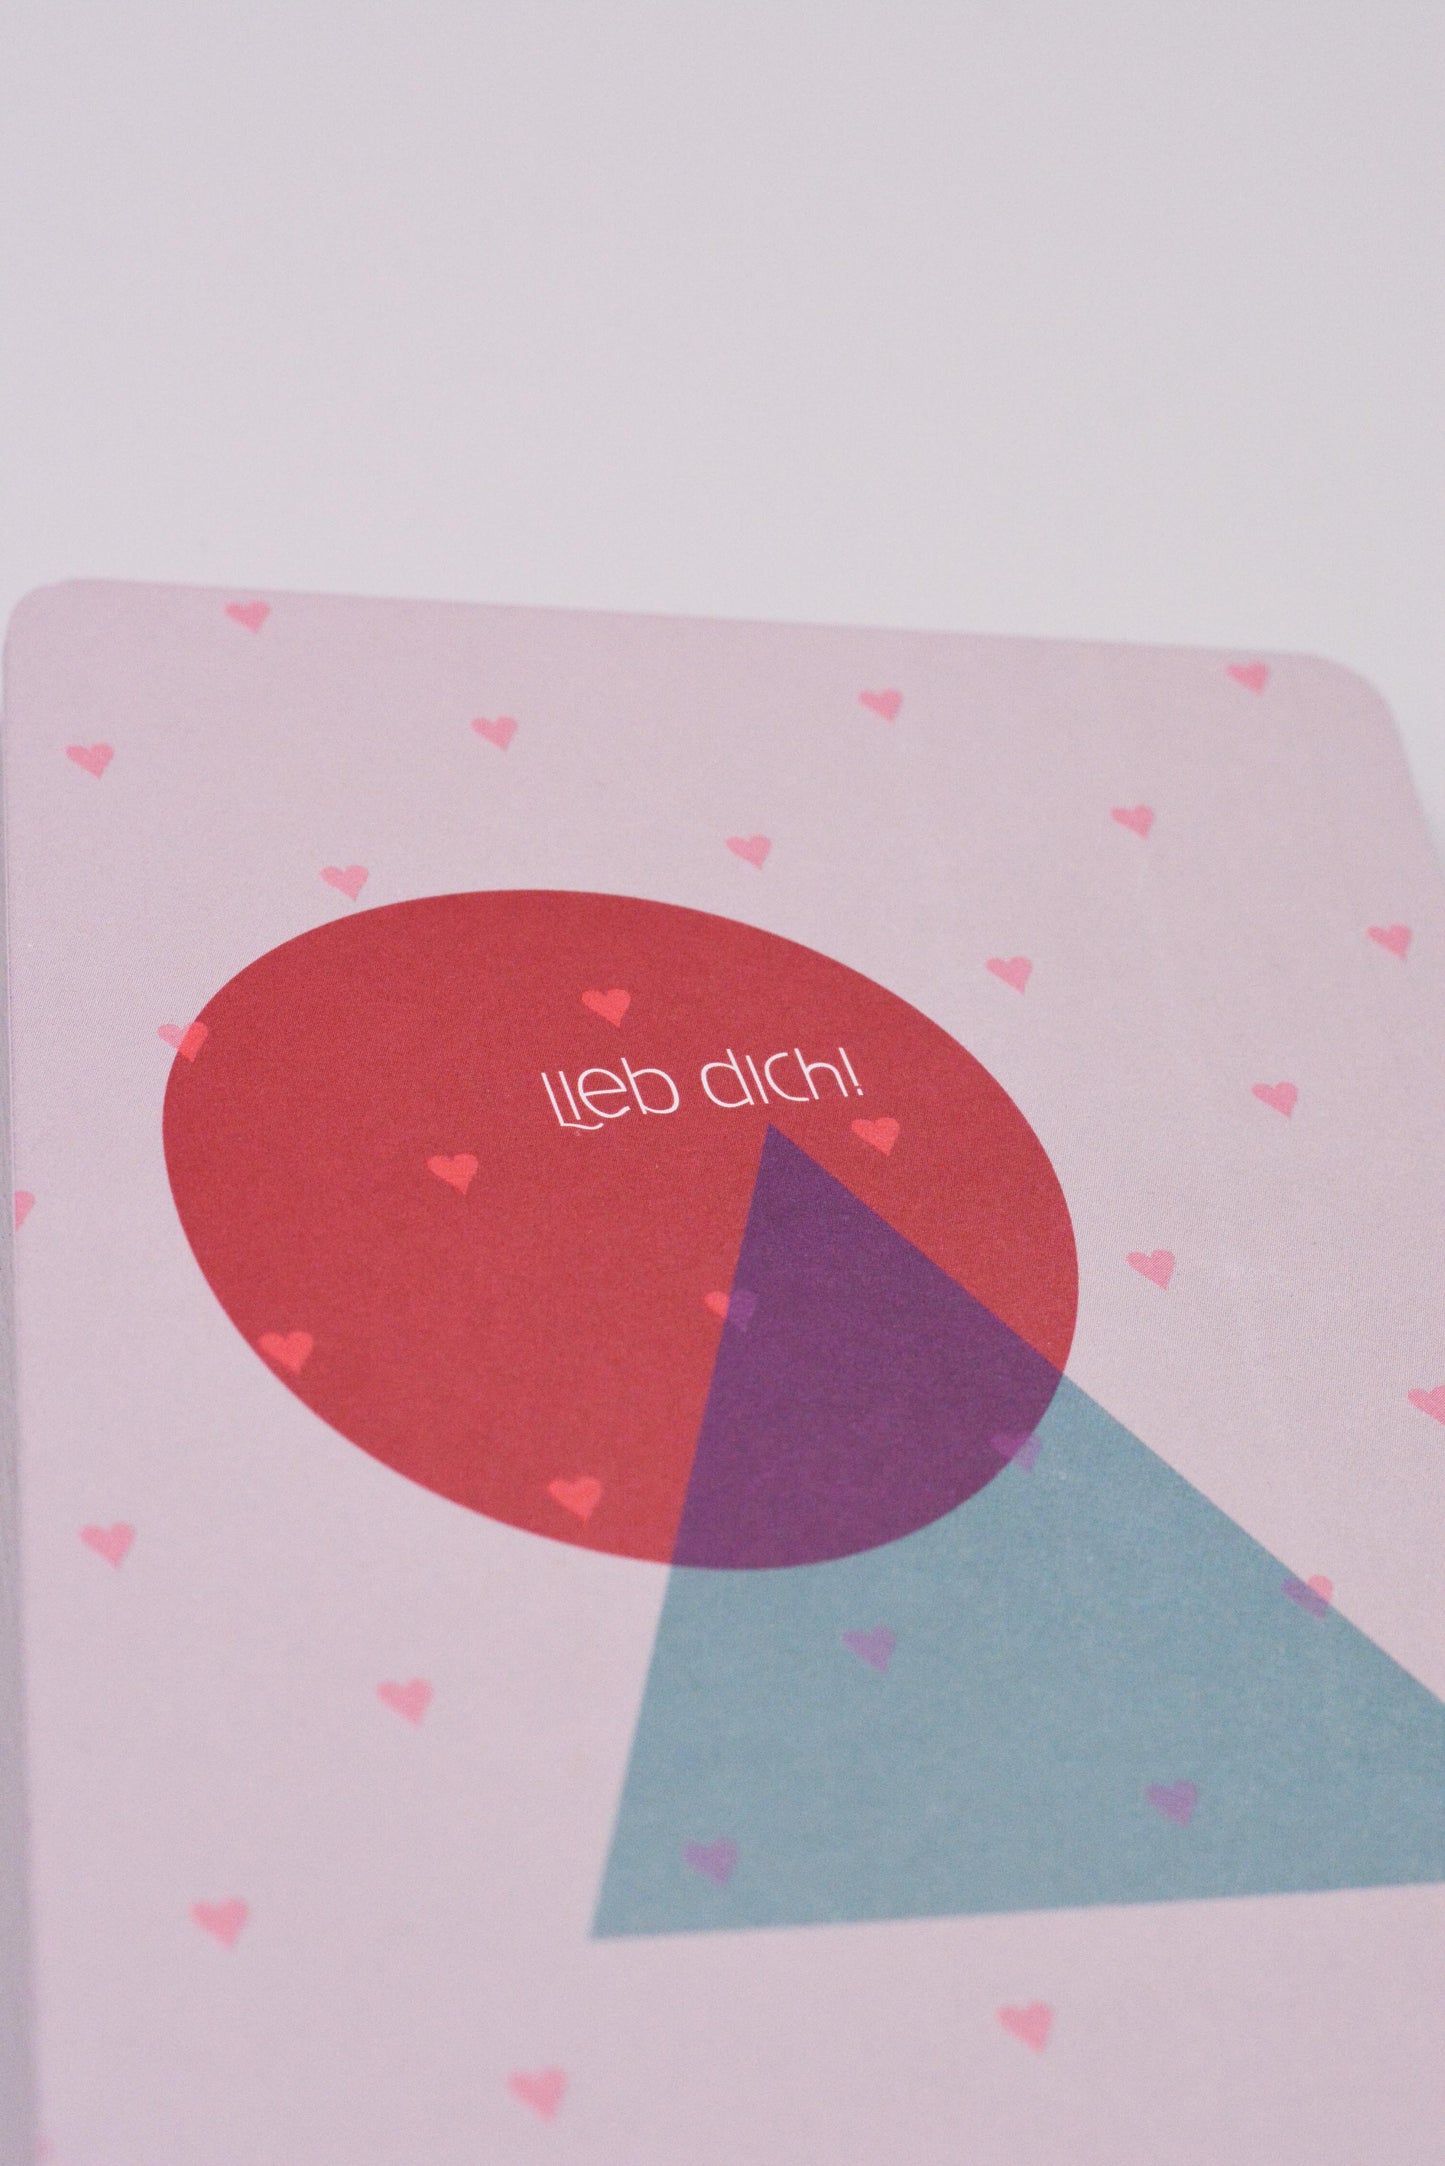 Postkarte - Liebe - Lieb dich